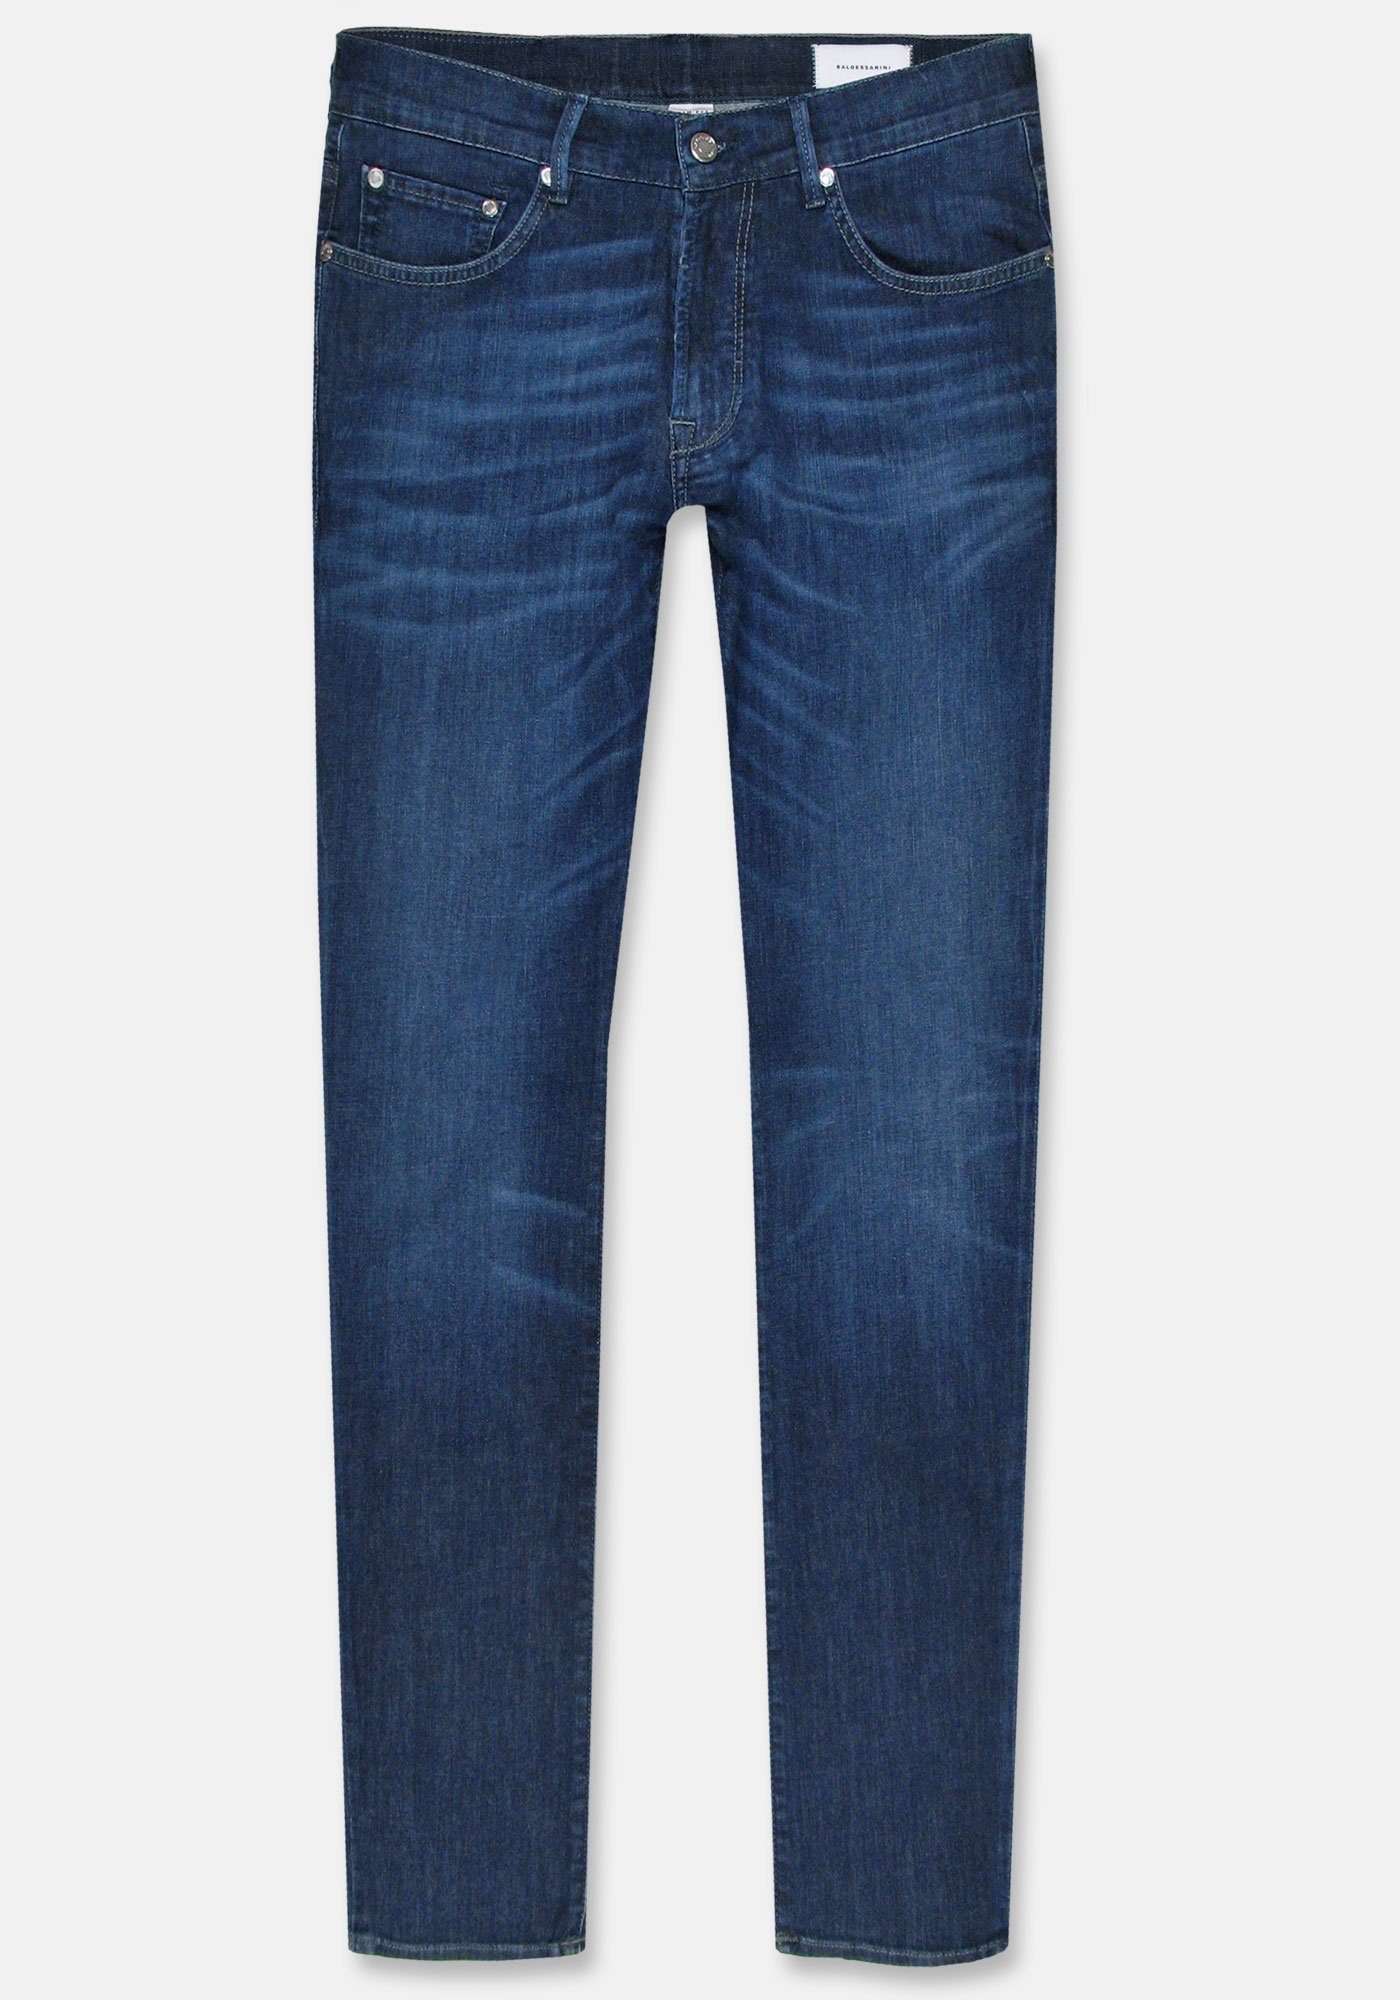 BALDESSARINI 5-Pocket-Jeans John Iconic Stretch Denim Ocean Blue Used